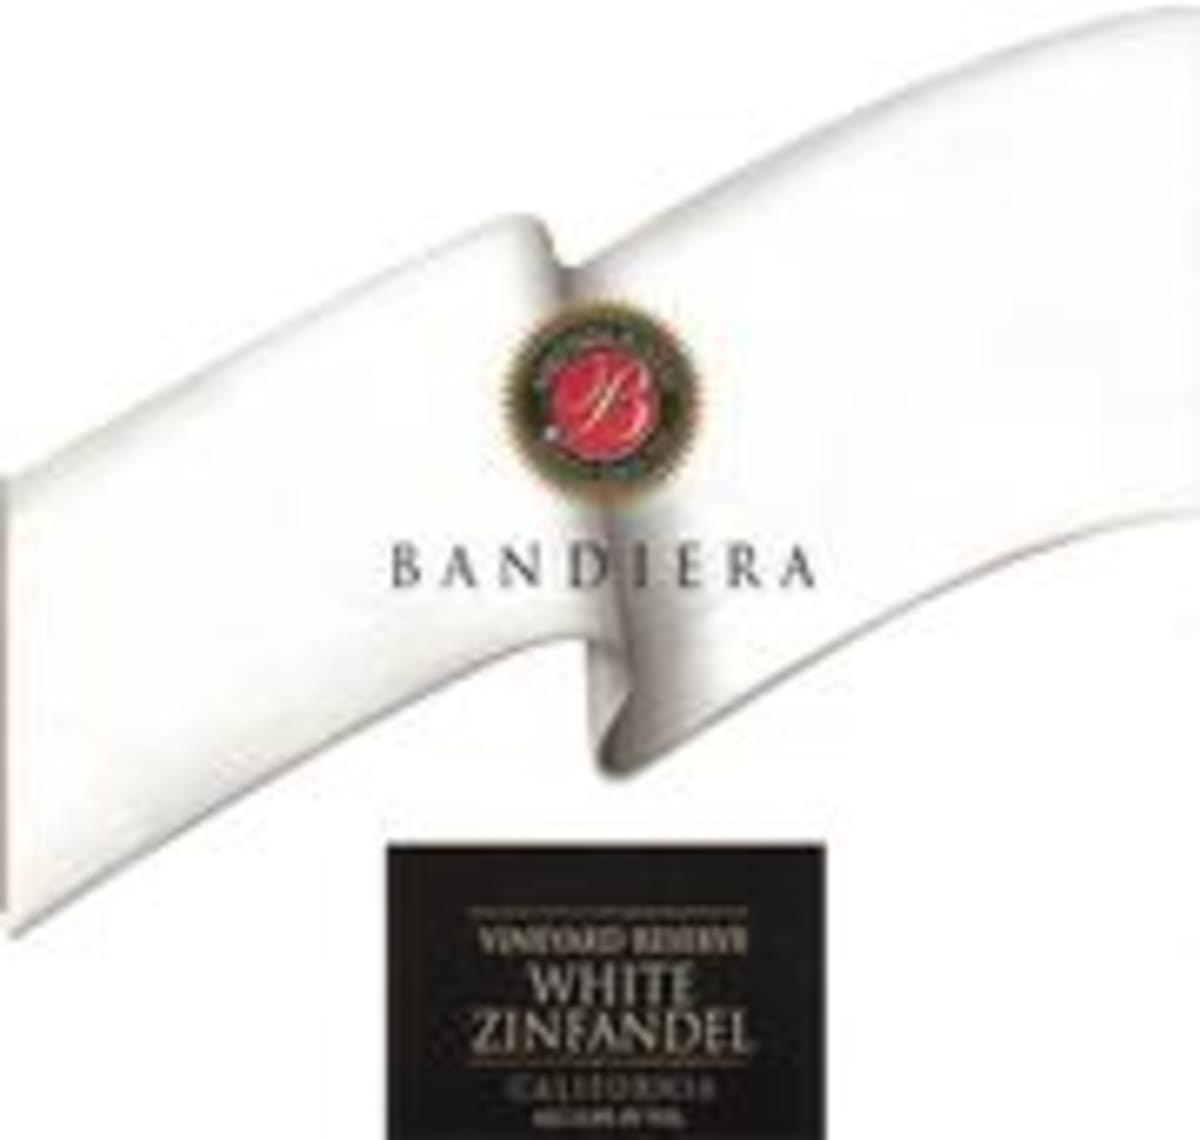 Bandiera Vineyard Reserve White Zinfandel 1999 Front Label